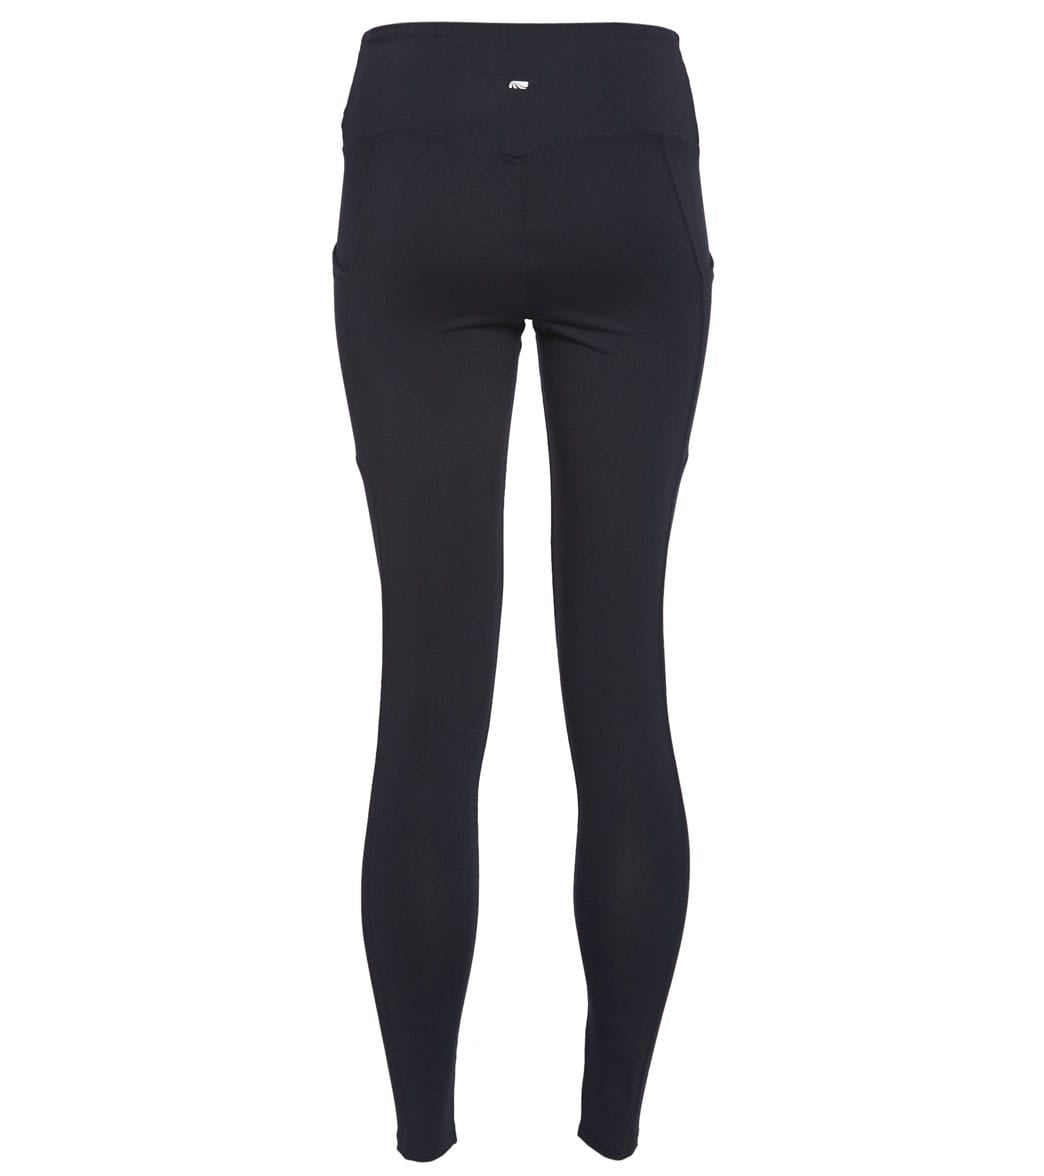 Marika Black Active Pants Size M - 60% off